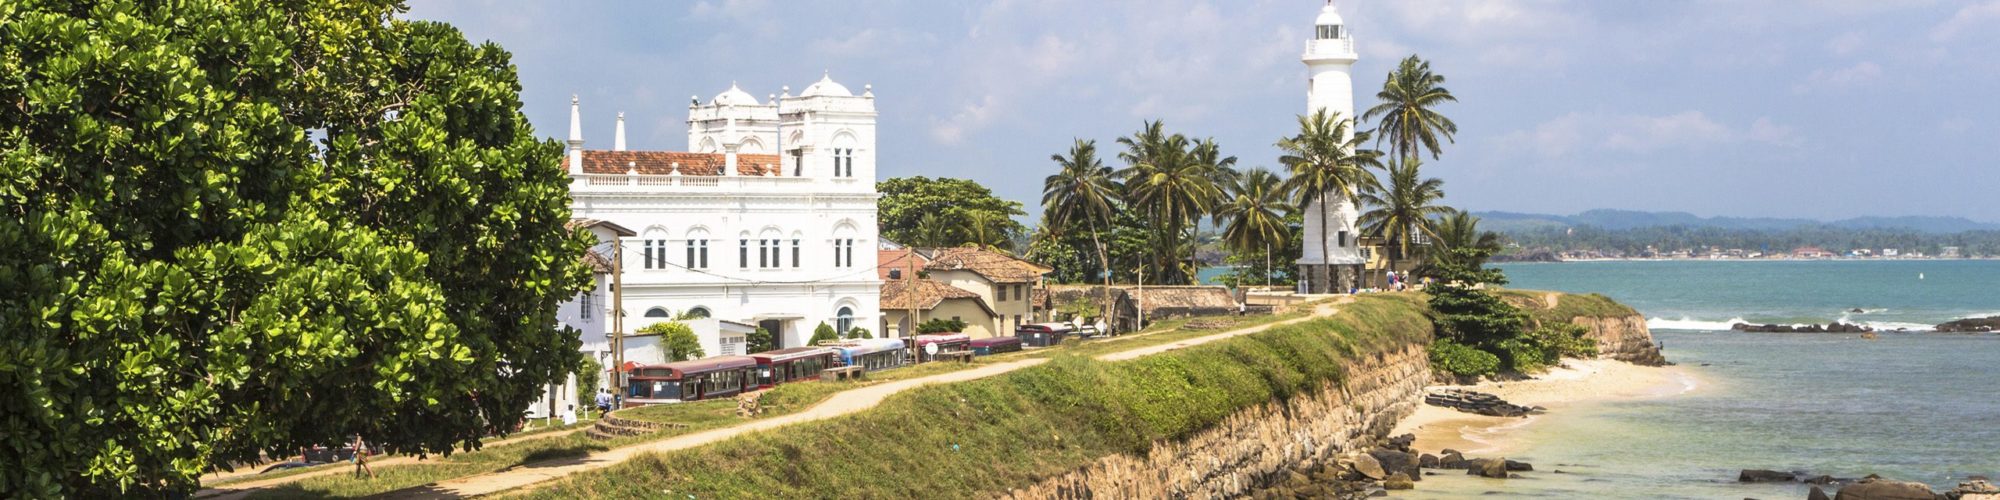 Sri Lanka travel agents packages deals